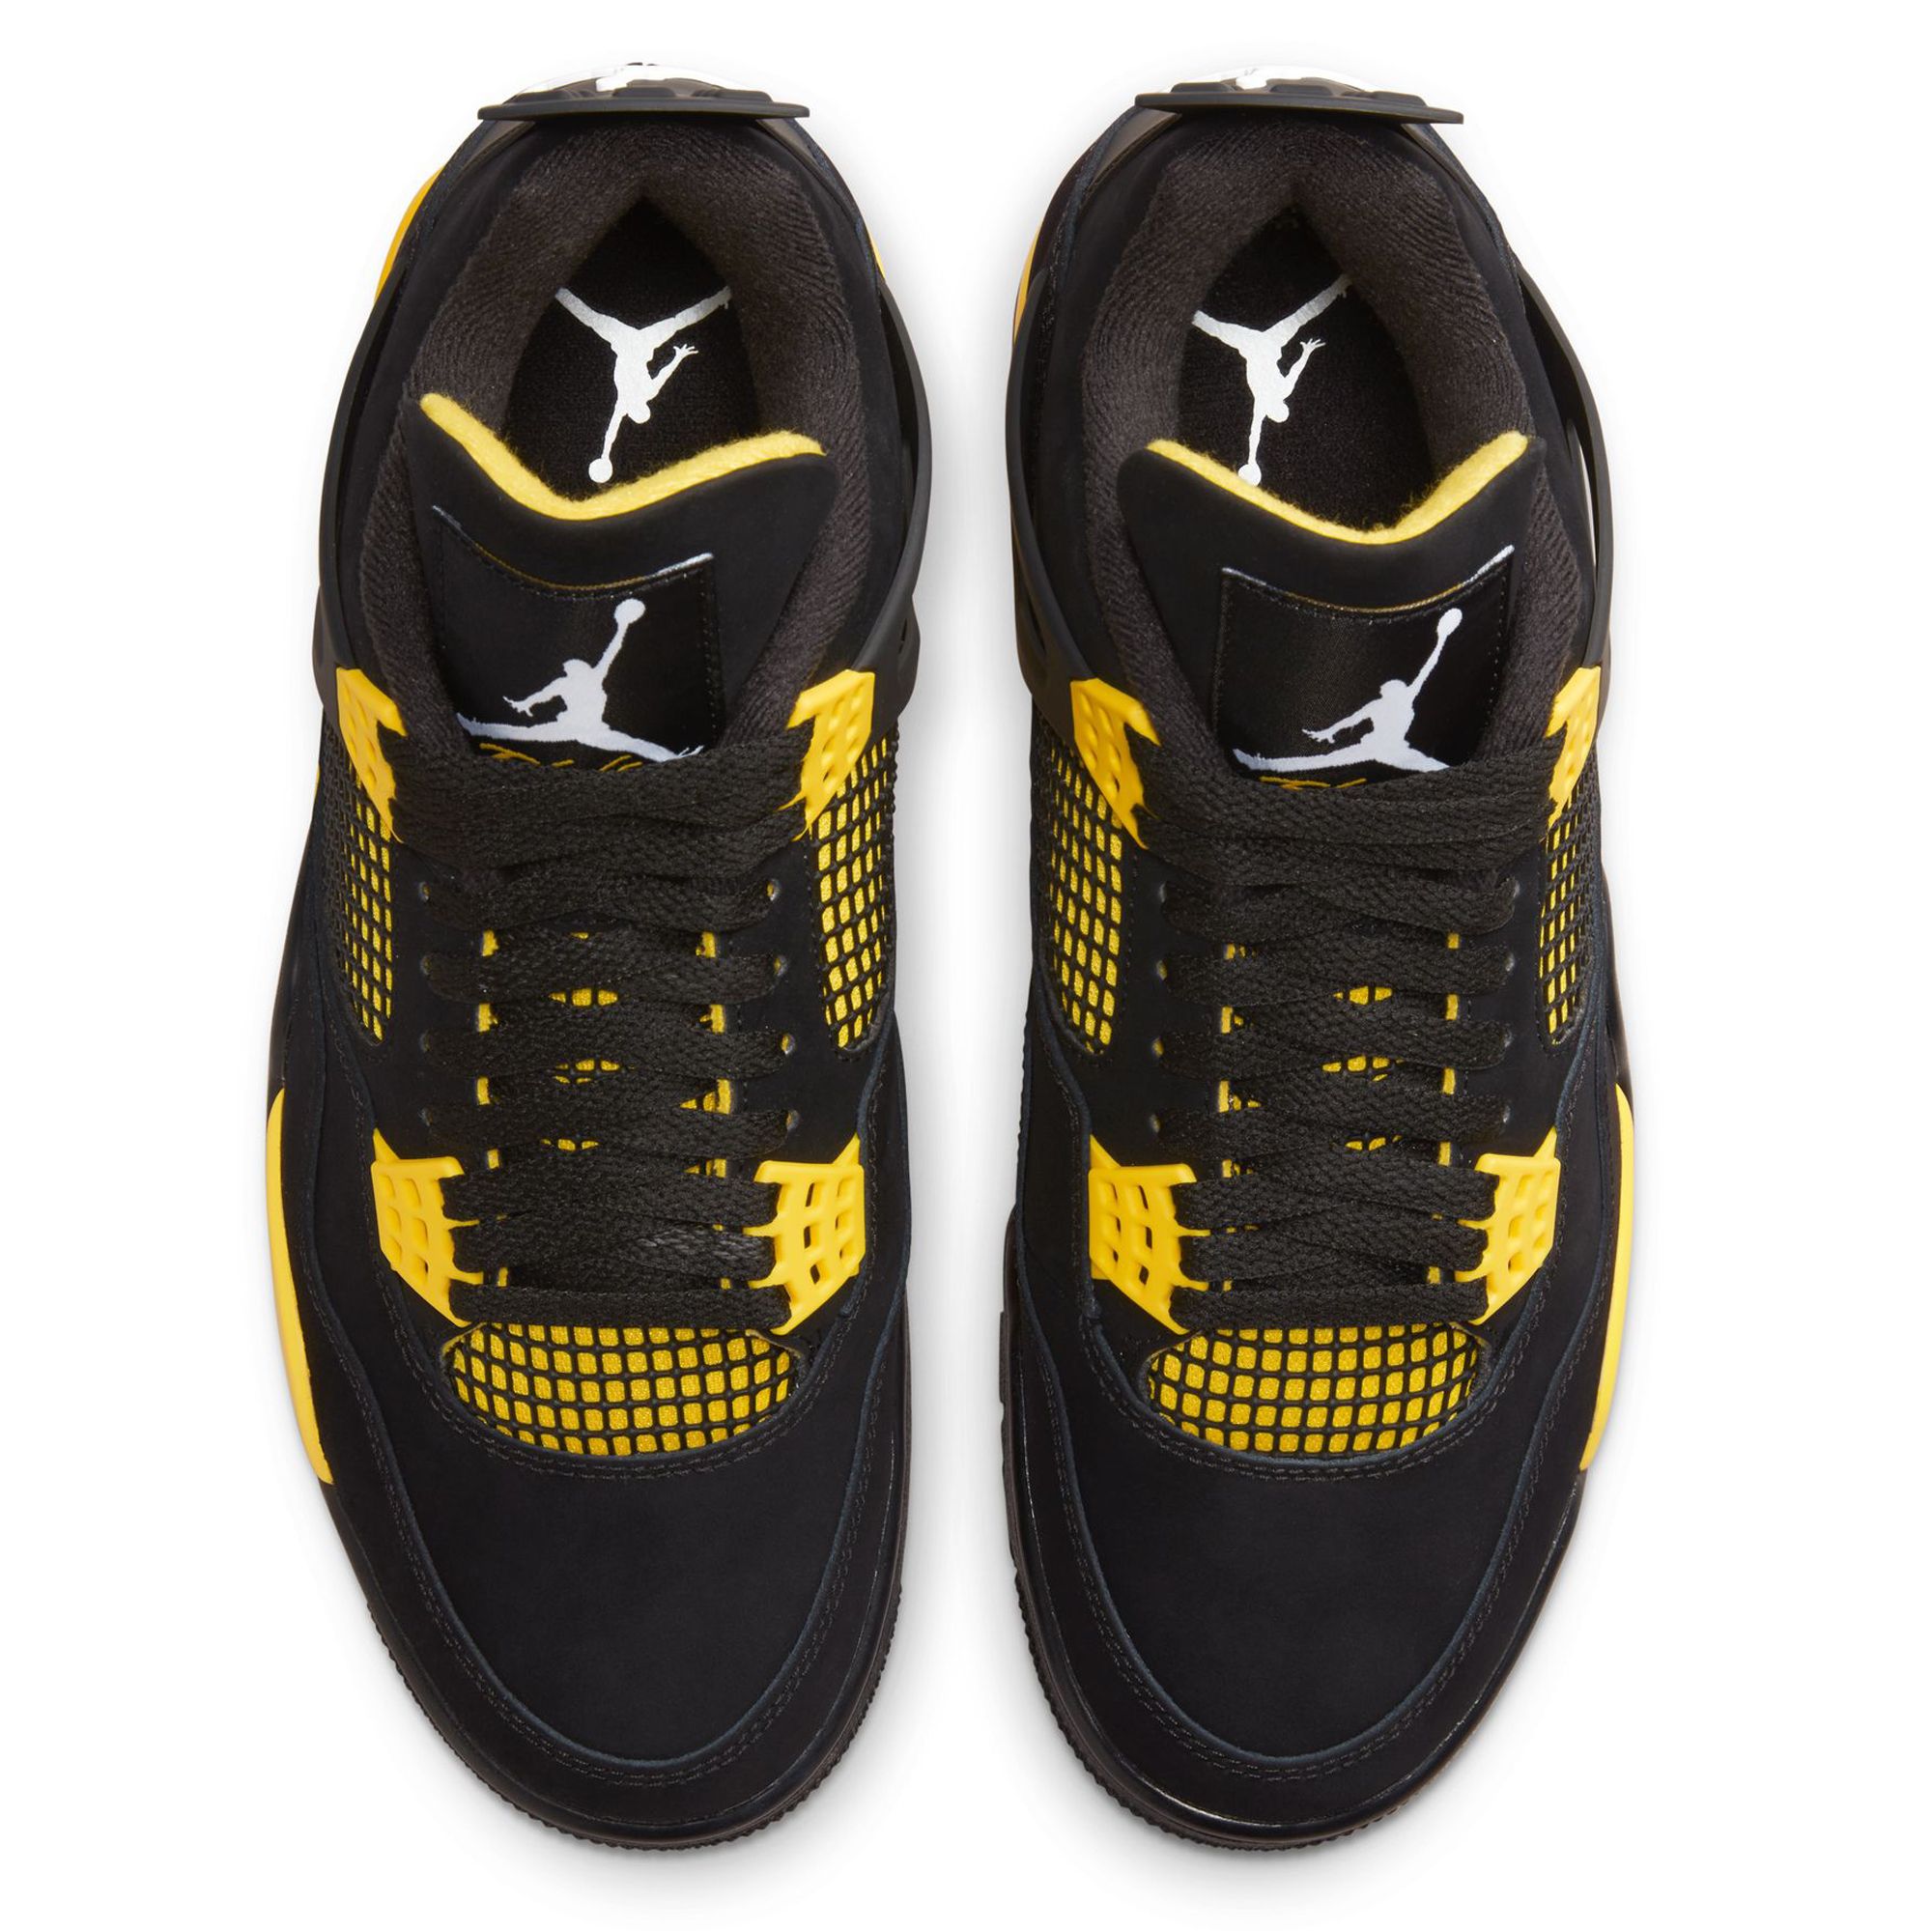 Nike Air Jordan 4 Retro White and Black – The Darkside Initiative